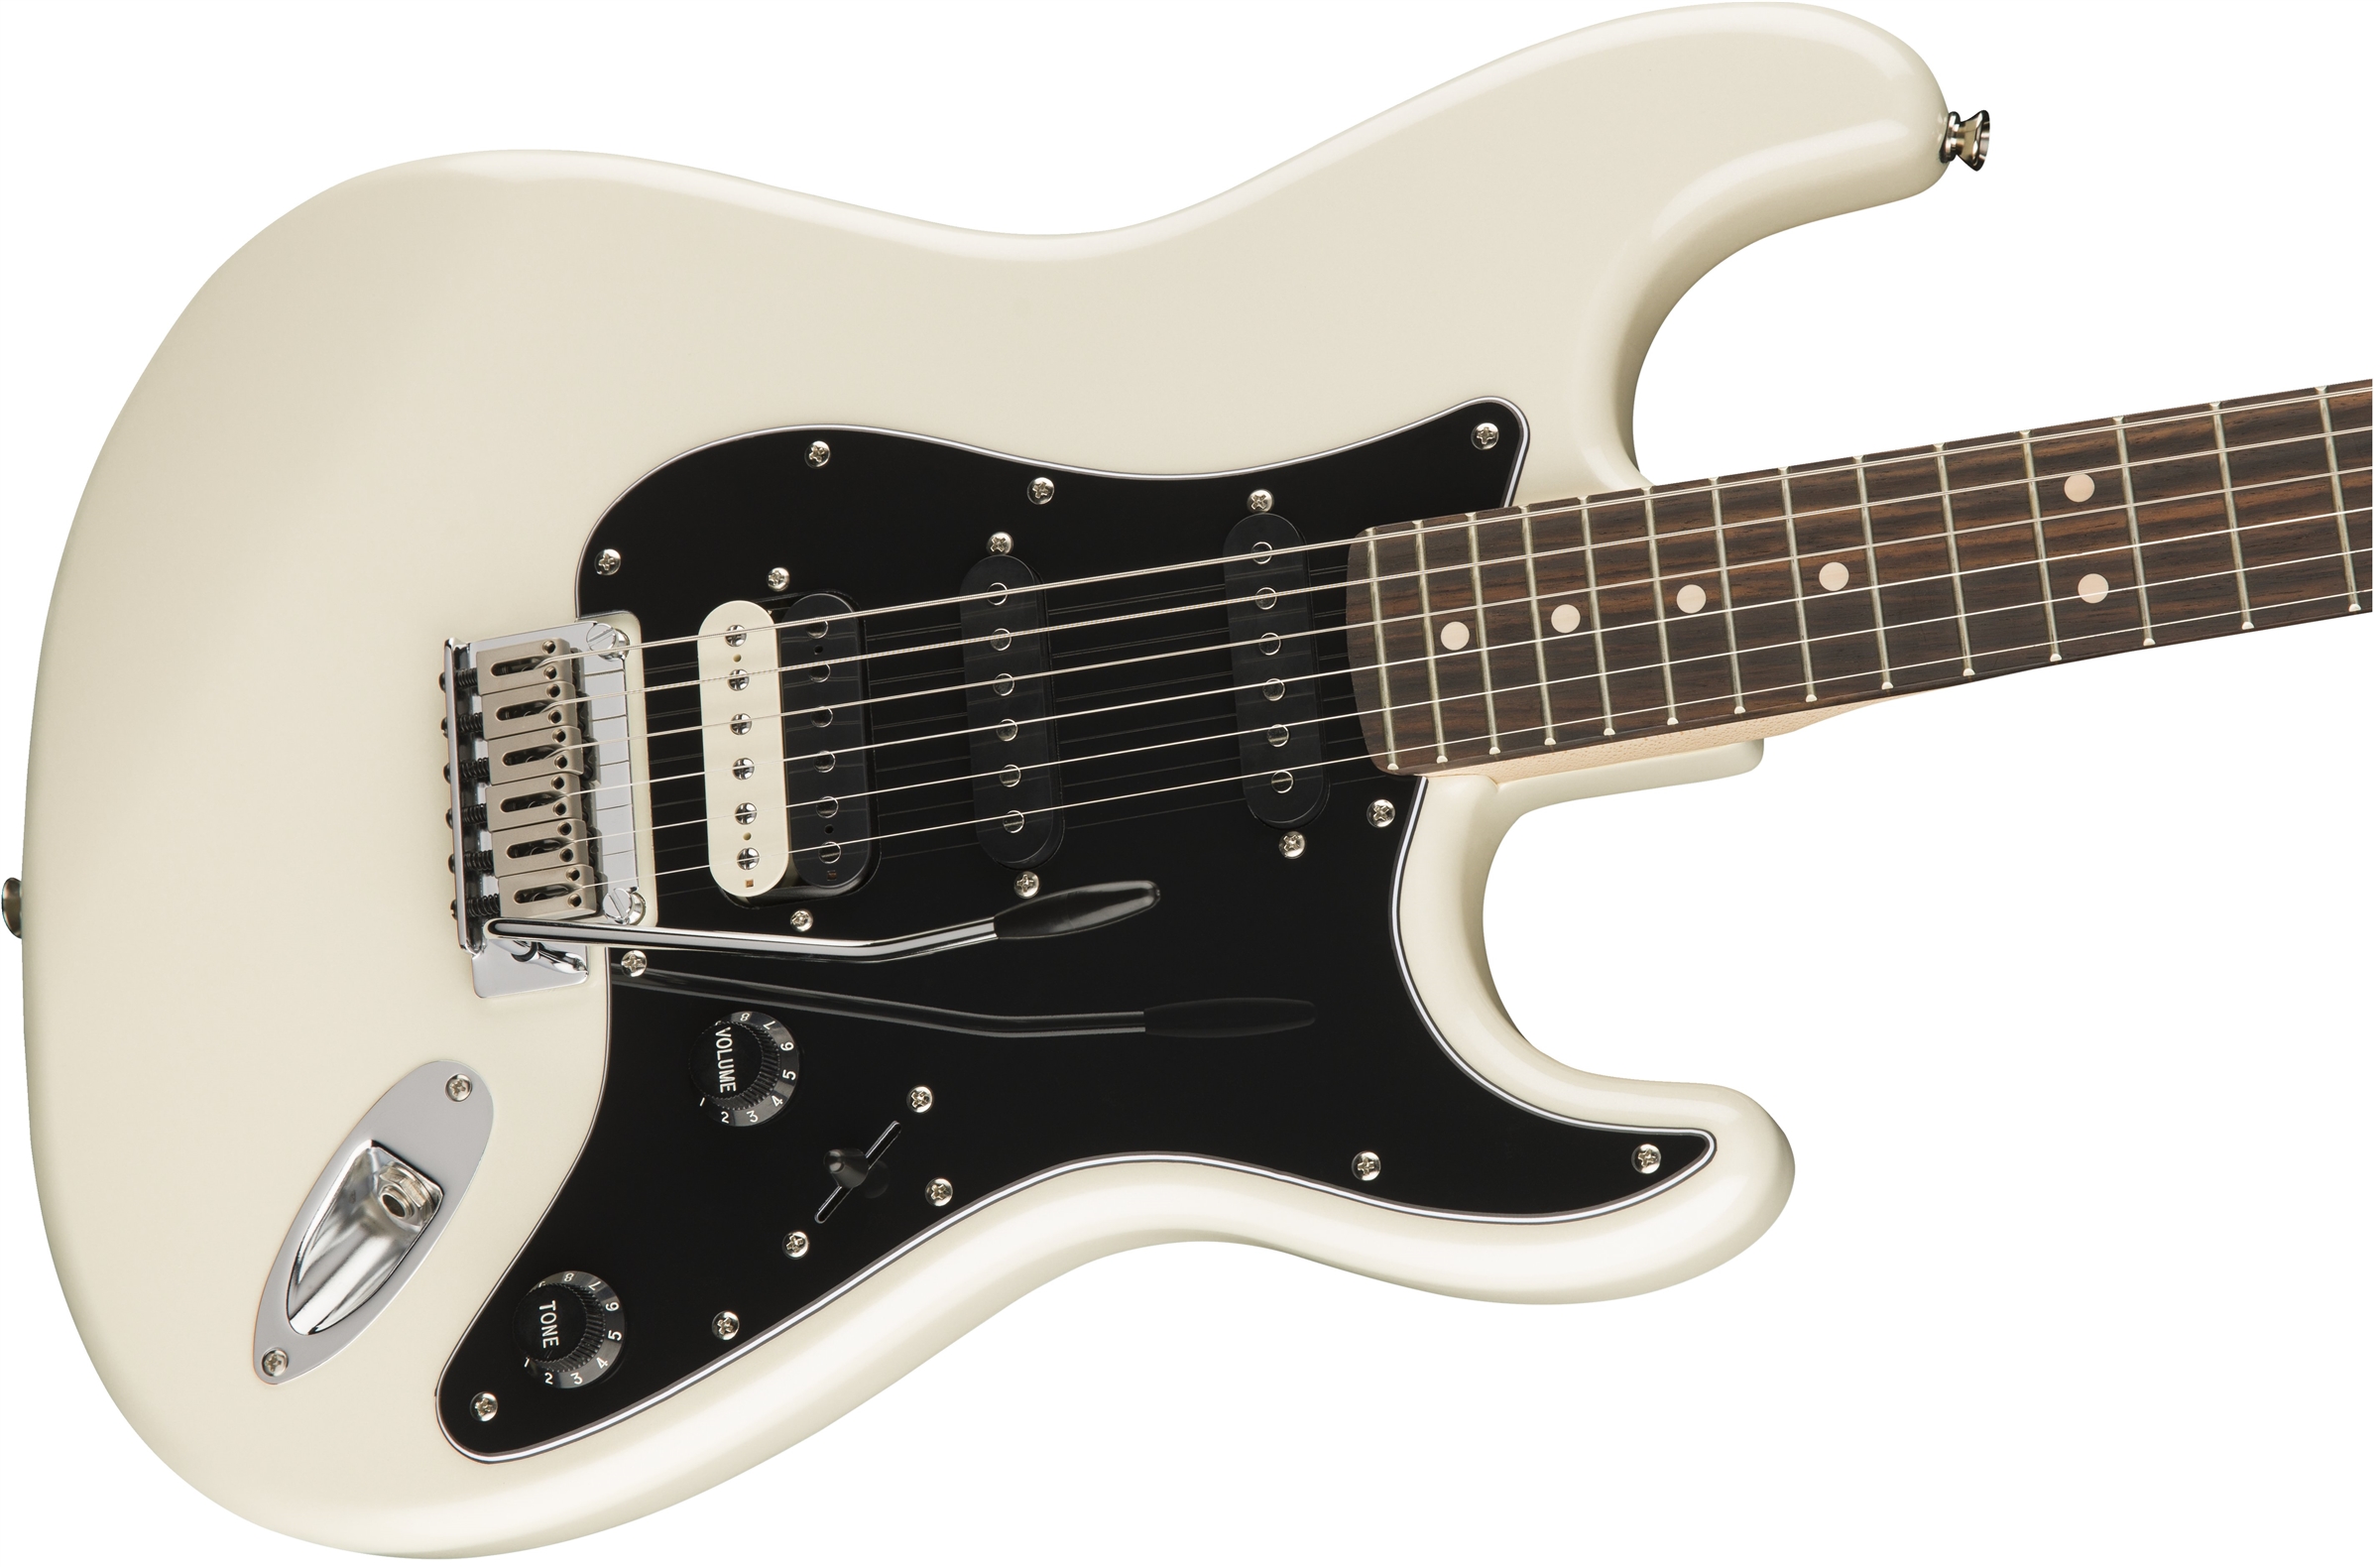 Электрогитара hss. Гитара Fender Squier. Электрогитара Fender Squier Stratocaster. Электрогитара Squier by Fender HSS. Squier Stratocaster белый.